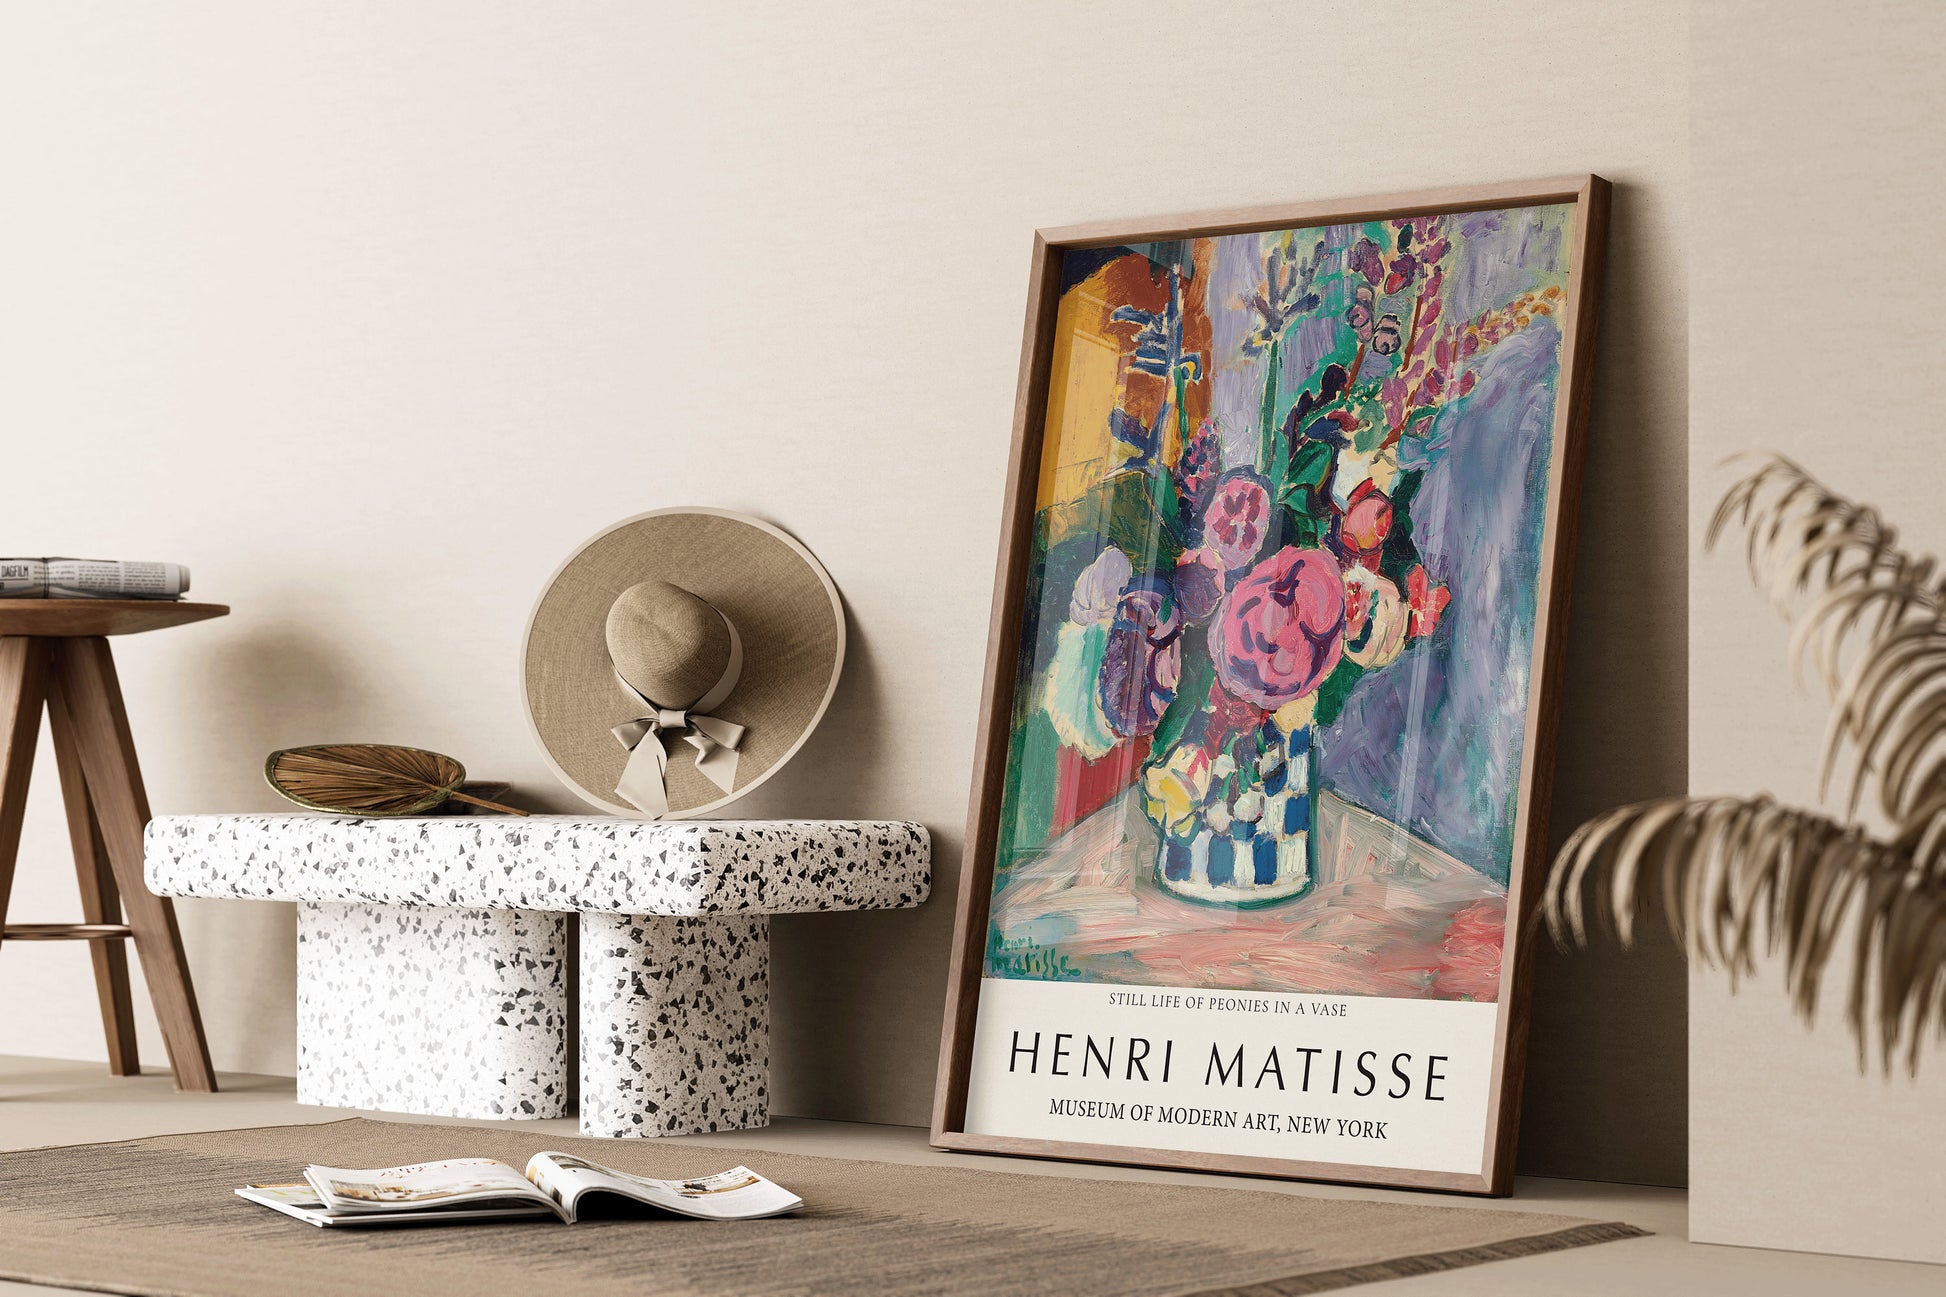 Henri Matisse - Still Life with Peonies